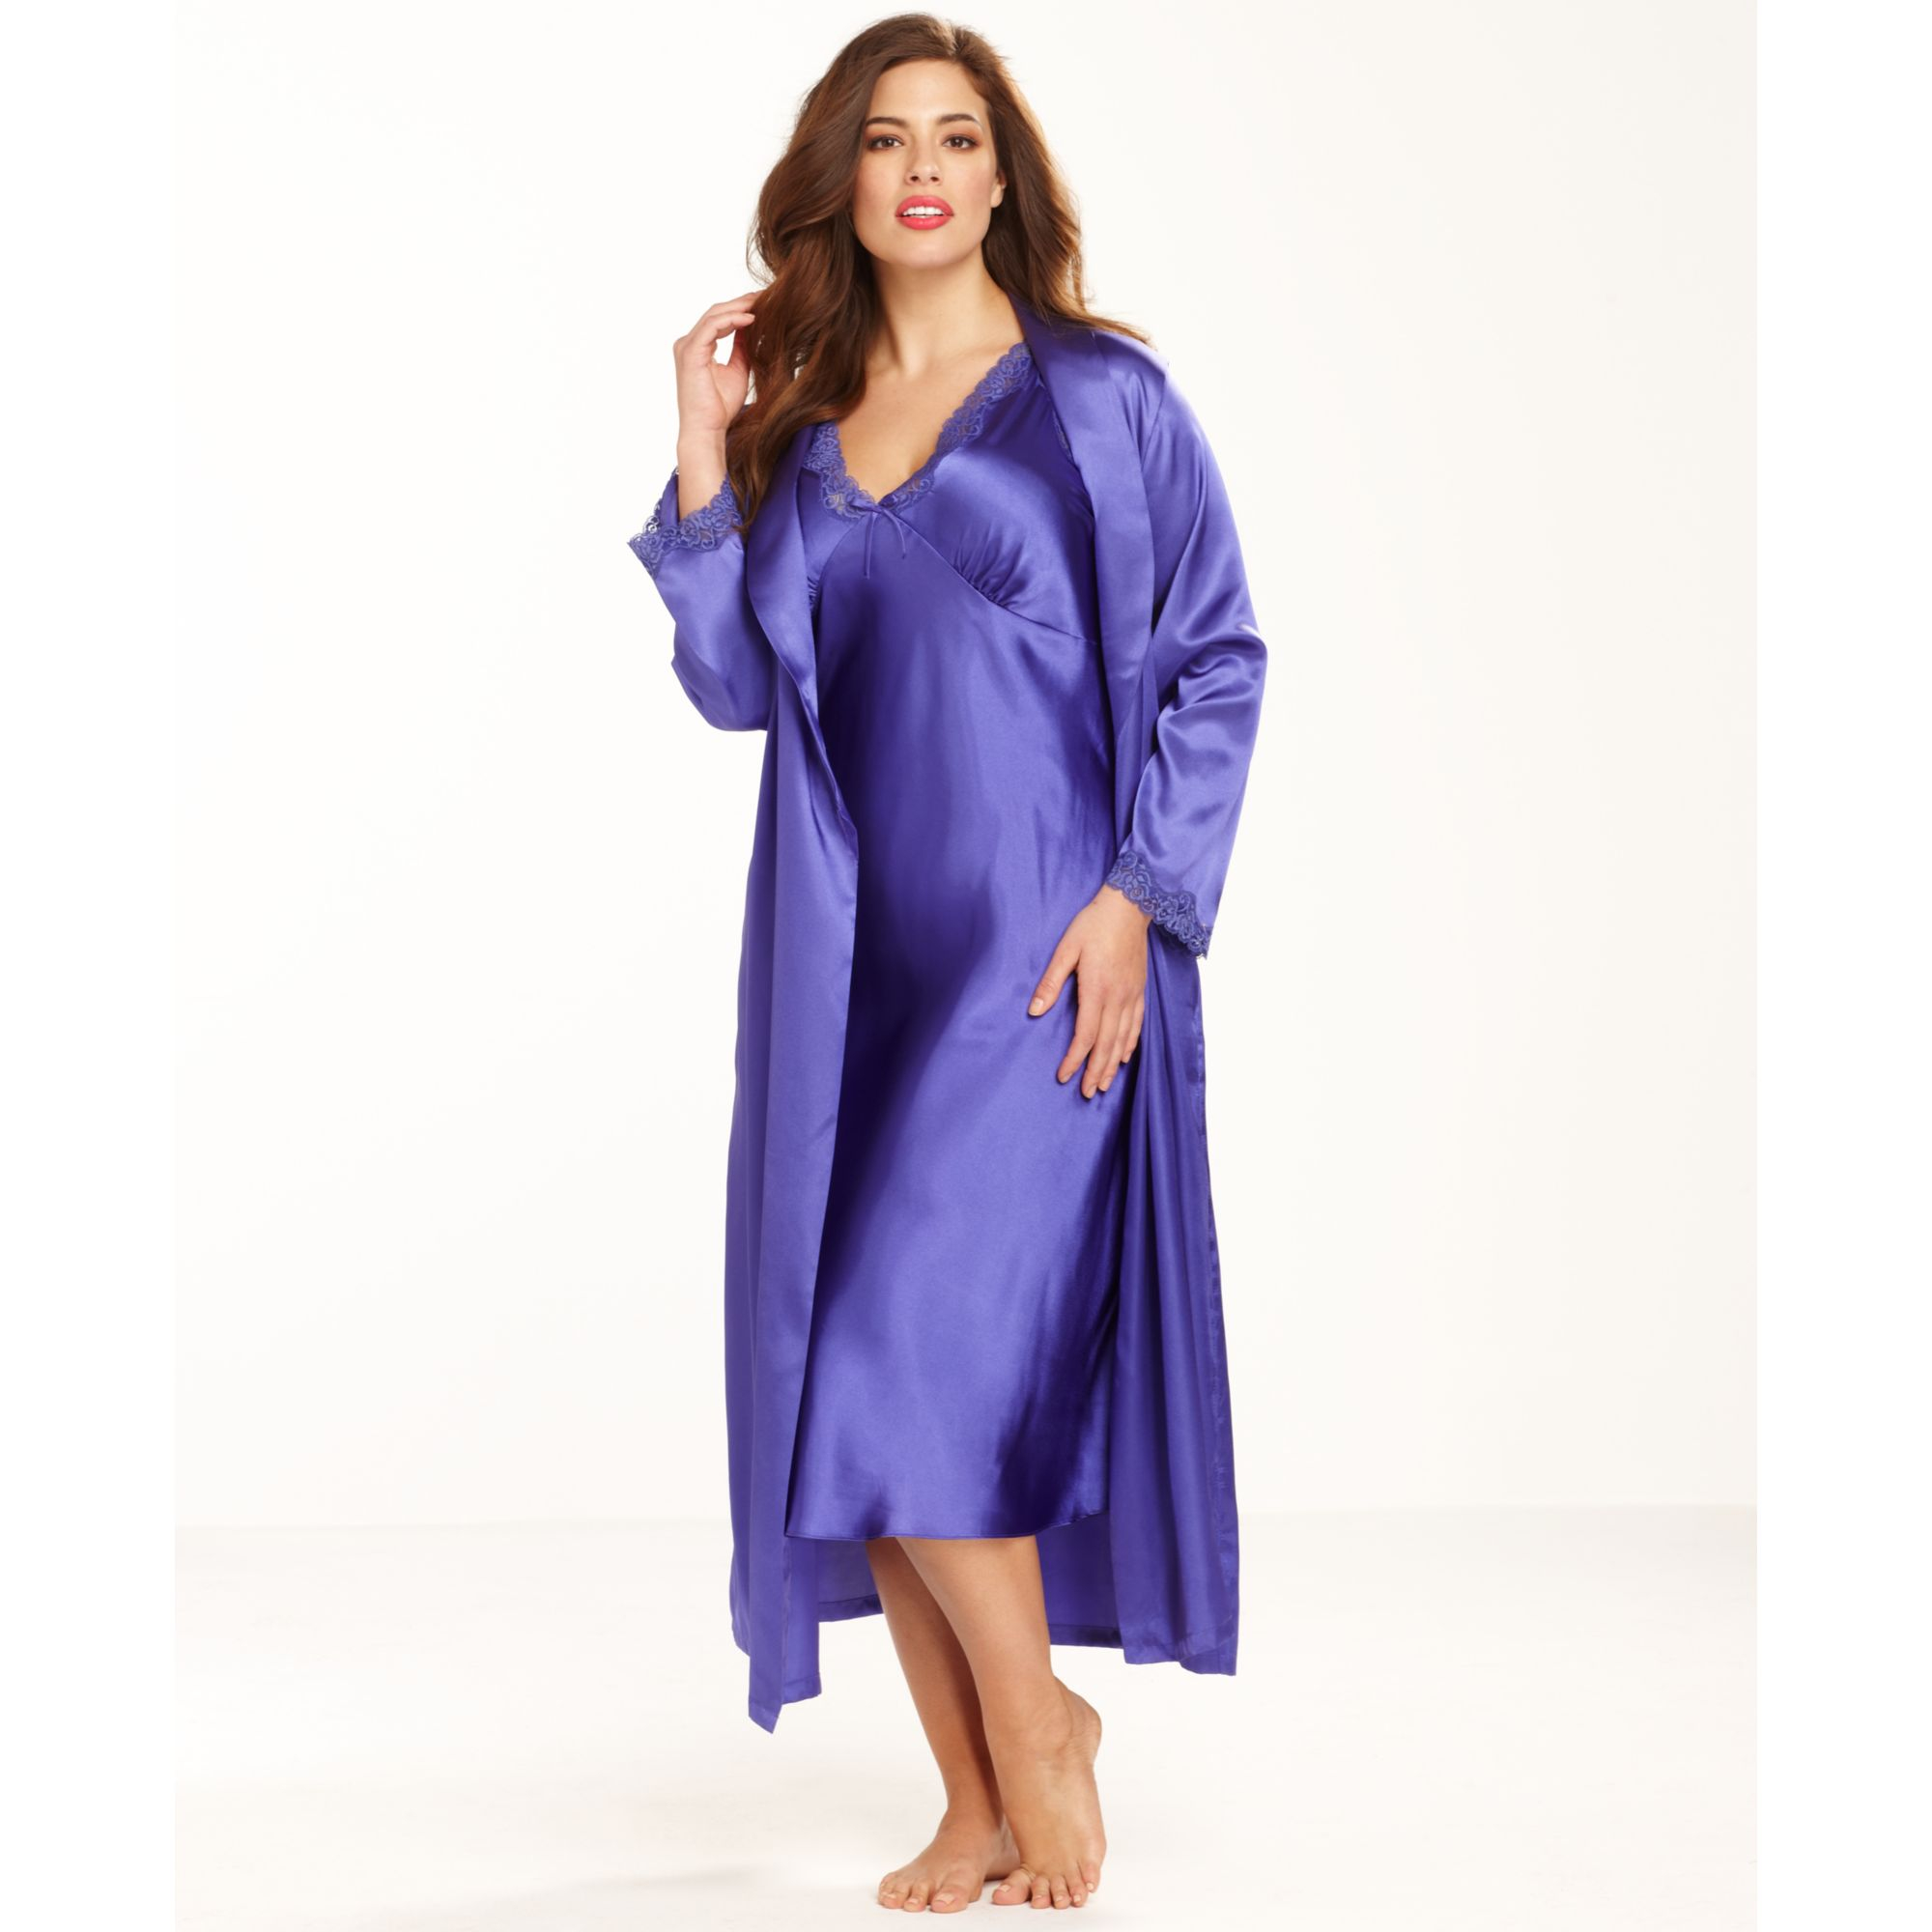 Lyst - Jones new york Plus Size Essentials Bliss Robe in Purple